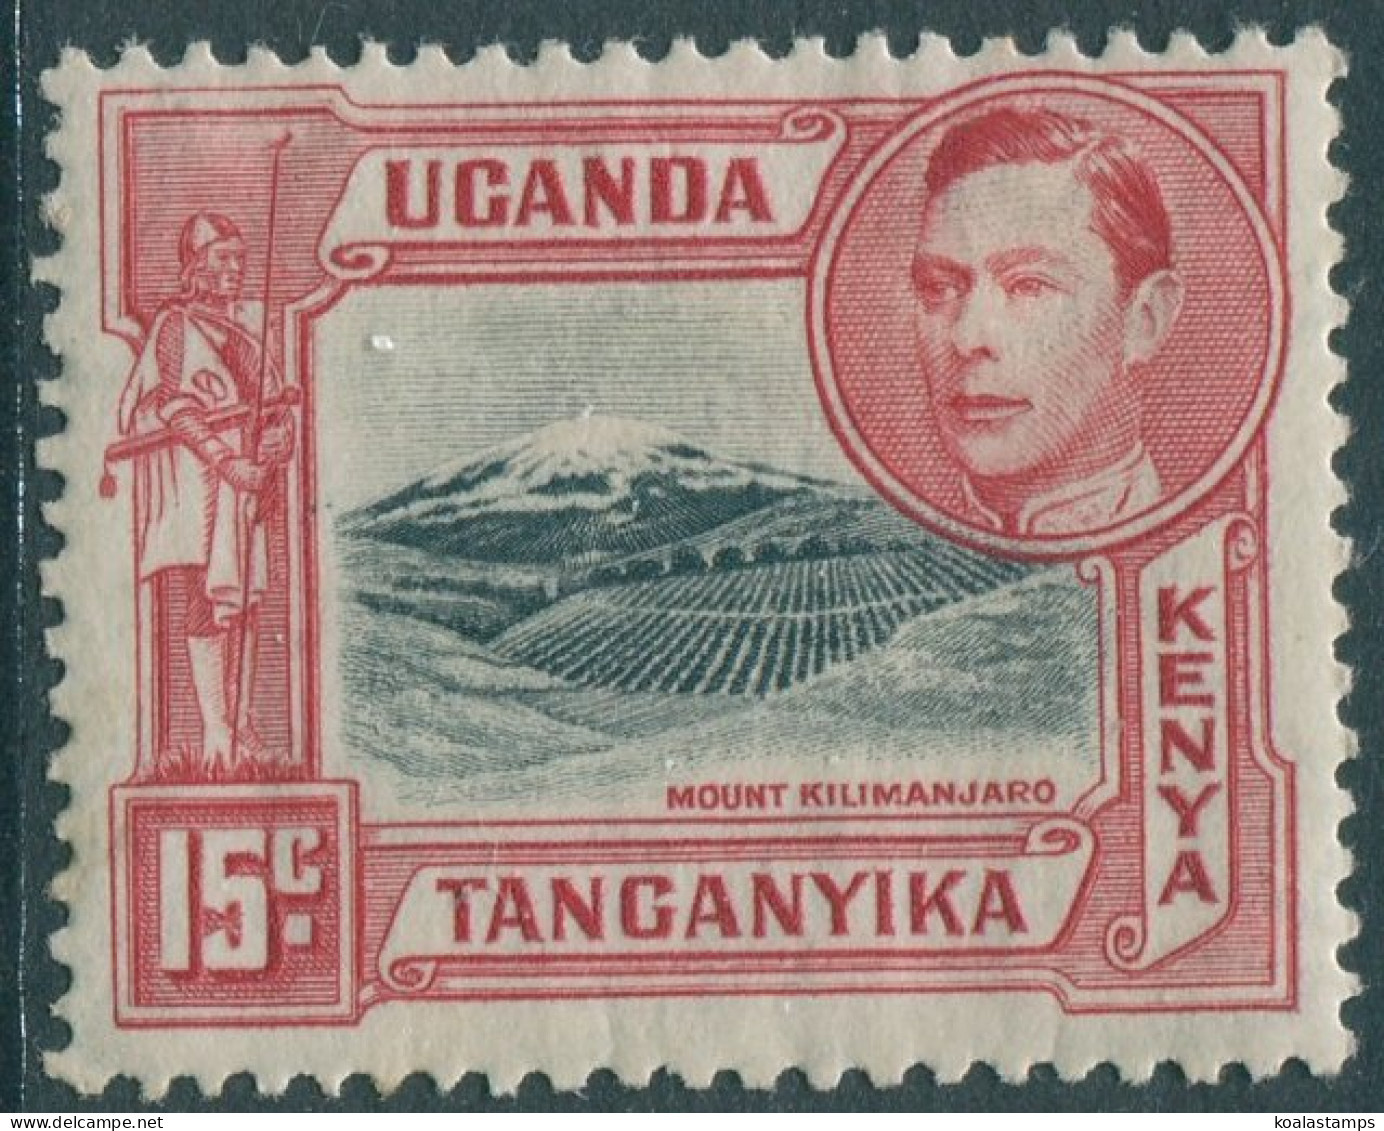 Kenya Uganda Tanganyika 1938 SG137 15c Black And Rose-red KGVI Killimanjaro MLH - Kenya, Uganda & Tanganyika